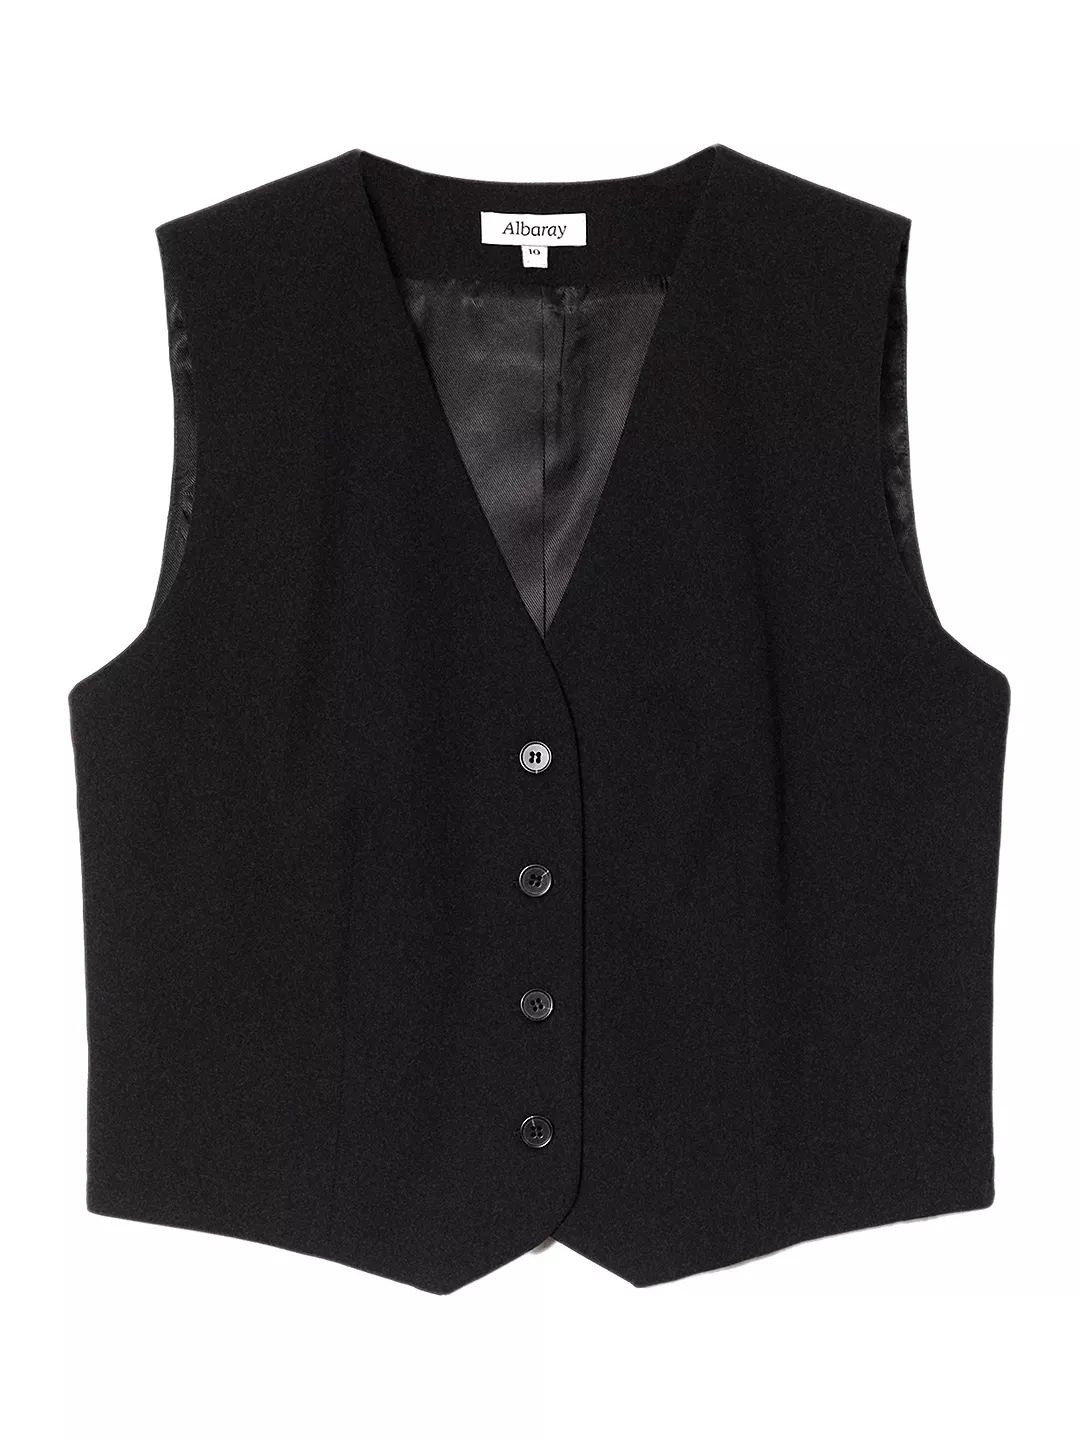 Albaray Plain Tailored Waistcoat, Black | John Lewis (UK)